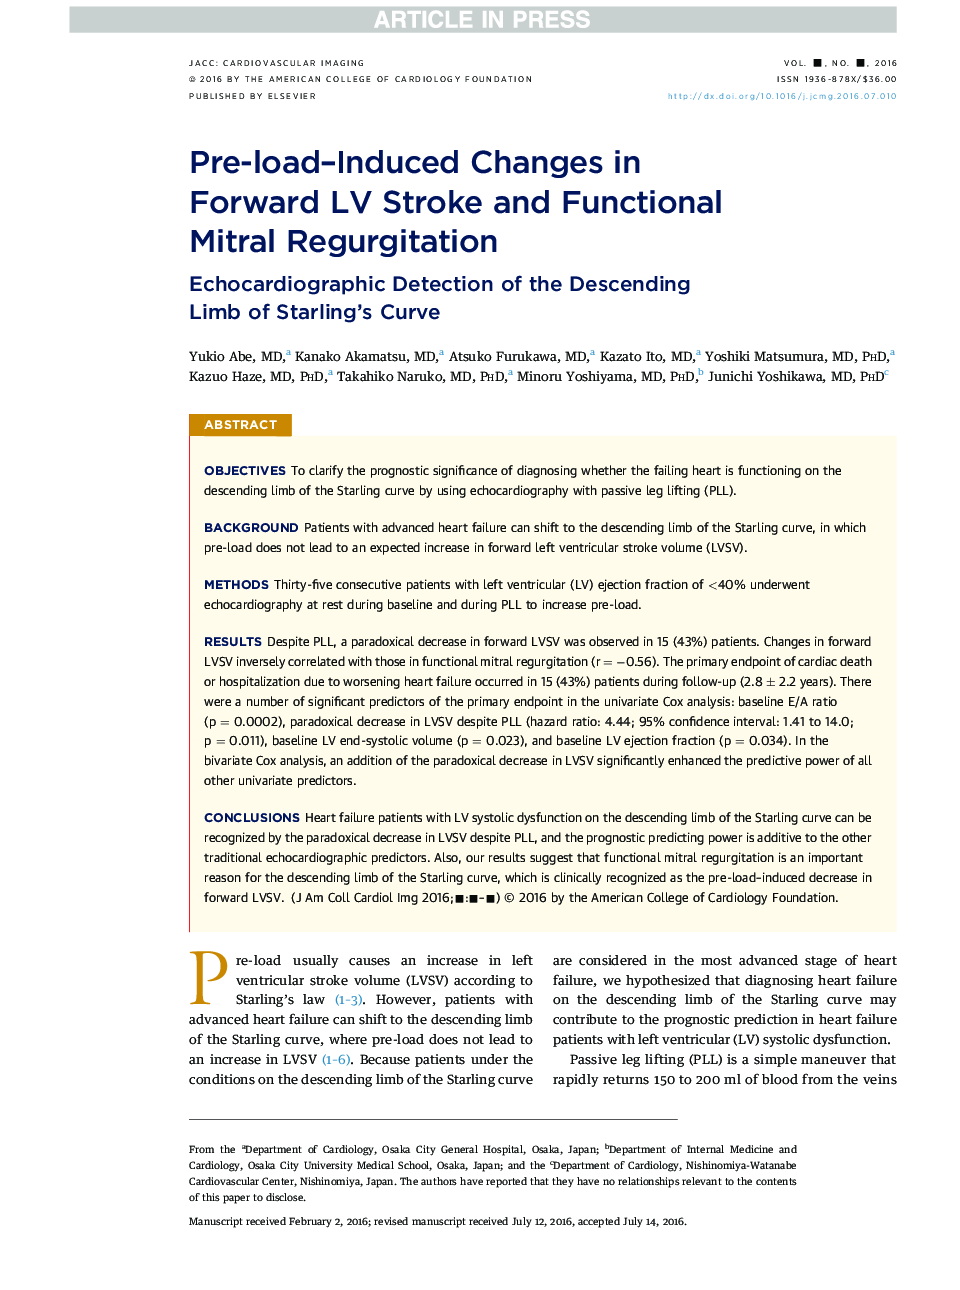 Pre-Load-Induced Changes in Forward LV Stroke and Functional MitralÂ Regurgitation